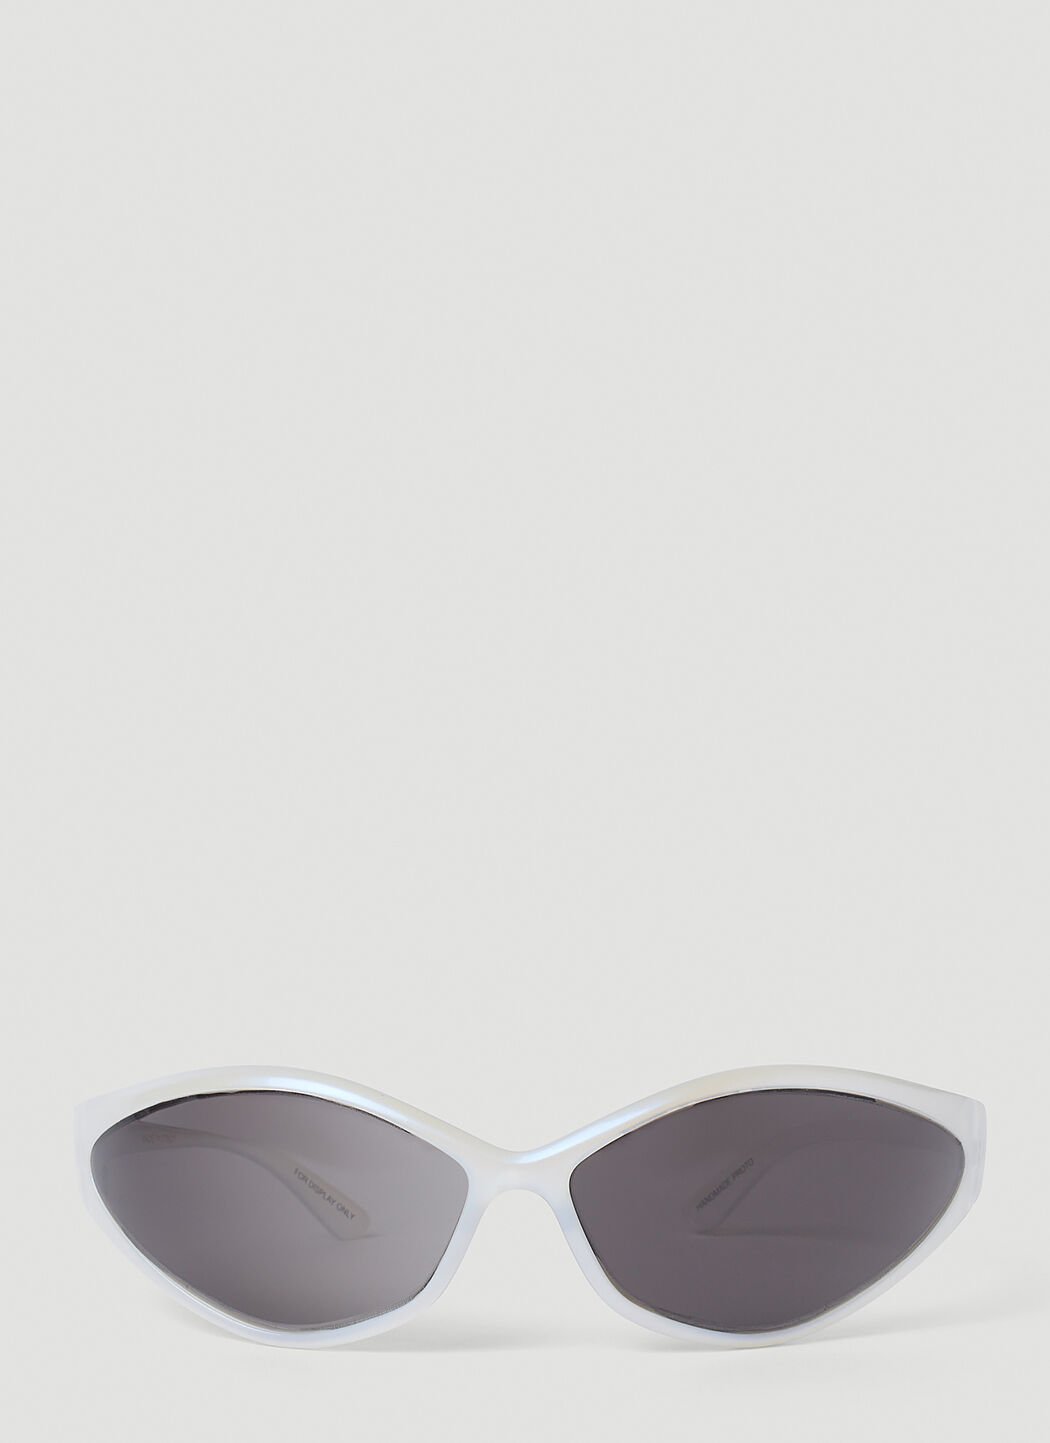 Burberry Swift Oval Sunglasses Beige bur0154025